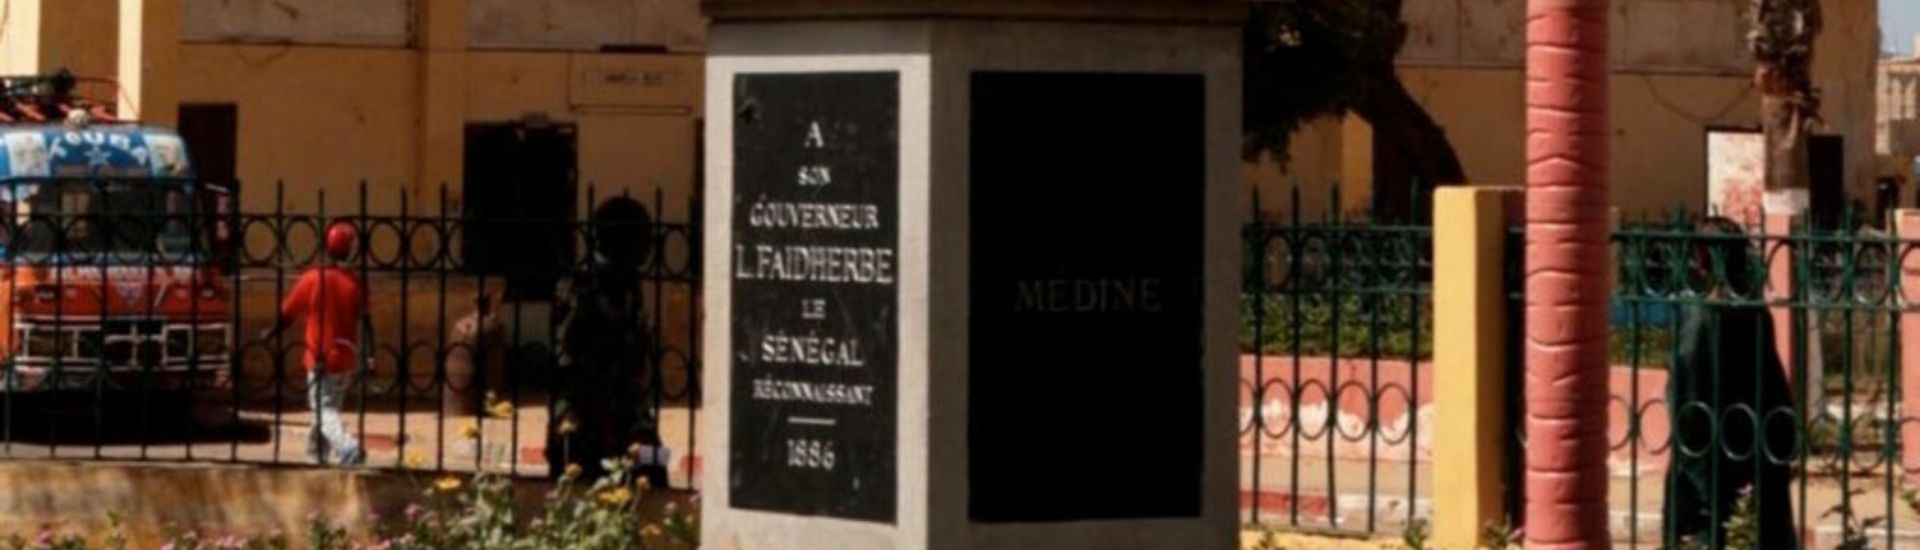 Sénégal Saint-Louis : la place Faidherbe renommée "Baya Ndar"